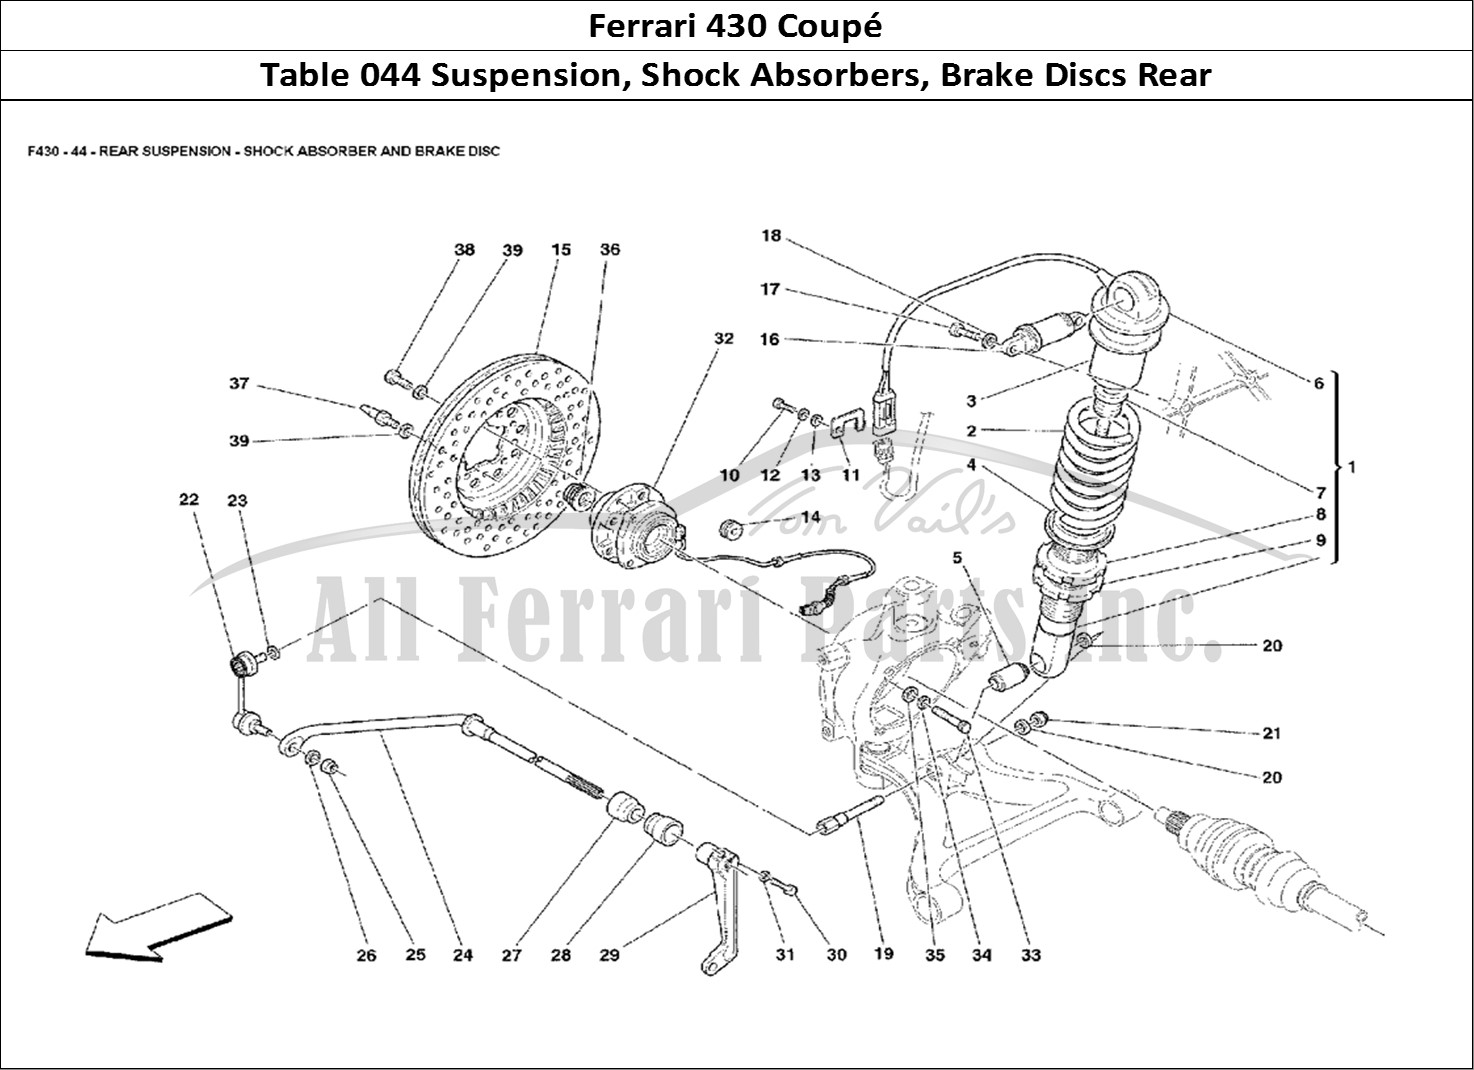 Ferrari Parts Ferrari 430 Coup Page 044 Rear Suspension - Shock A